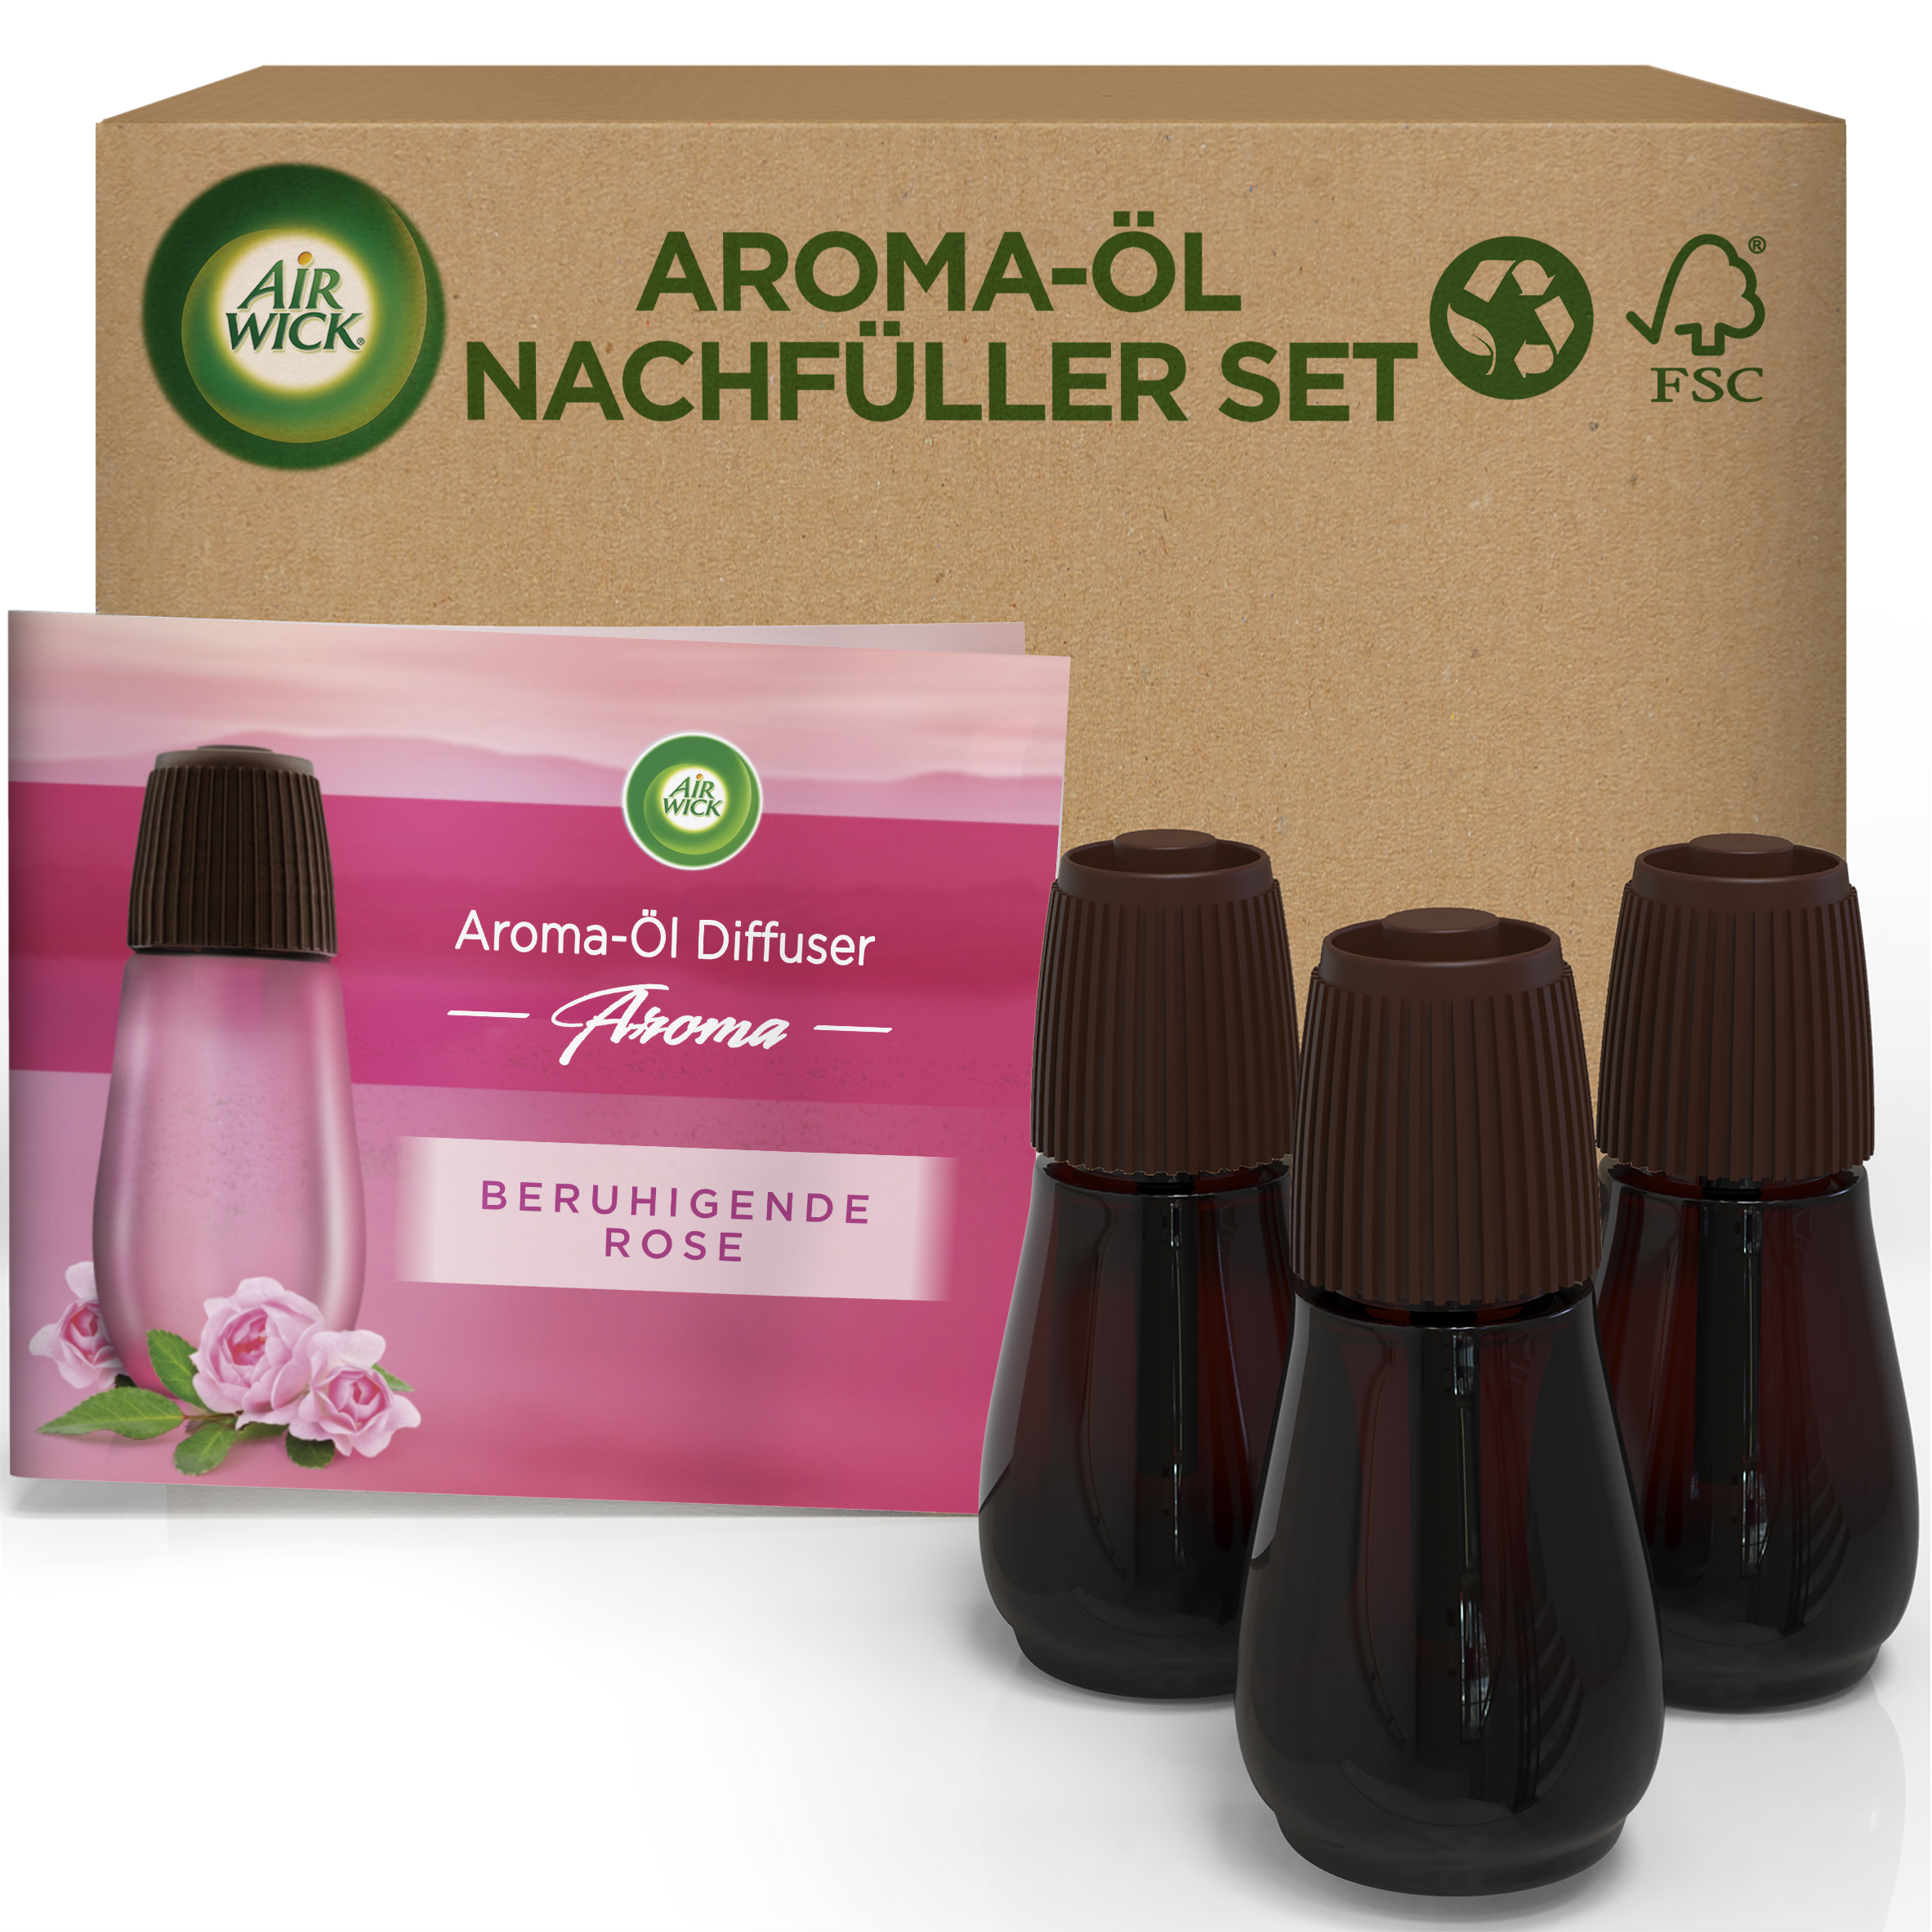 Air Wick Aroma-Öl Diffuser eCom Nachfüller-Set Beruhigende Rose